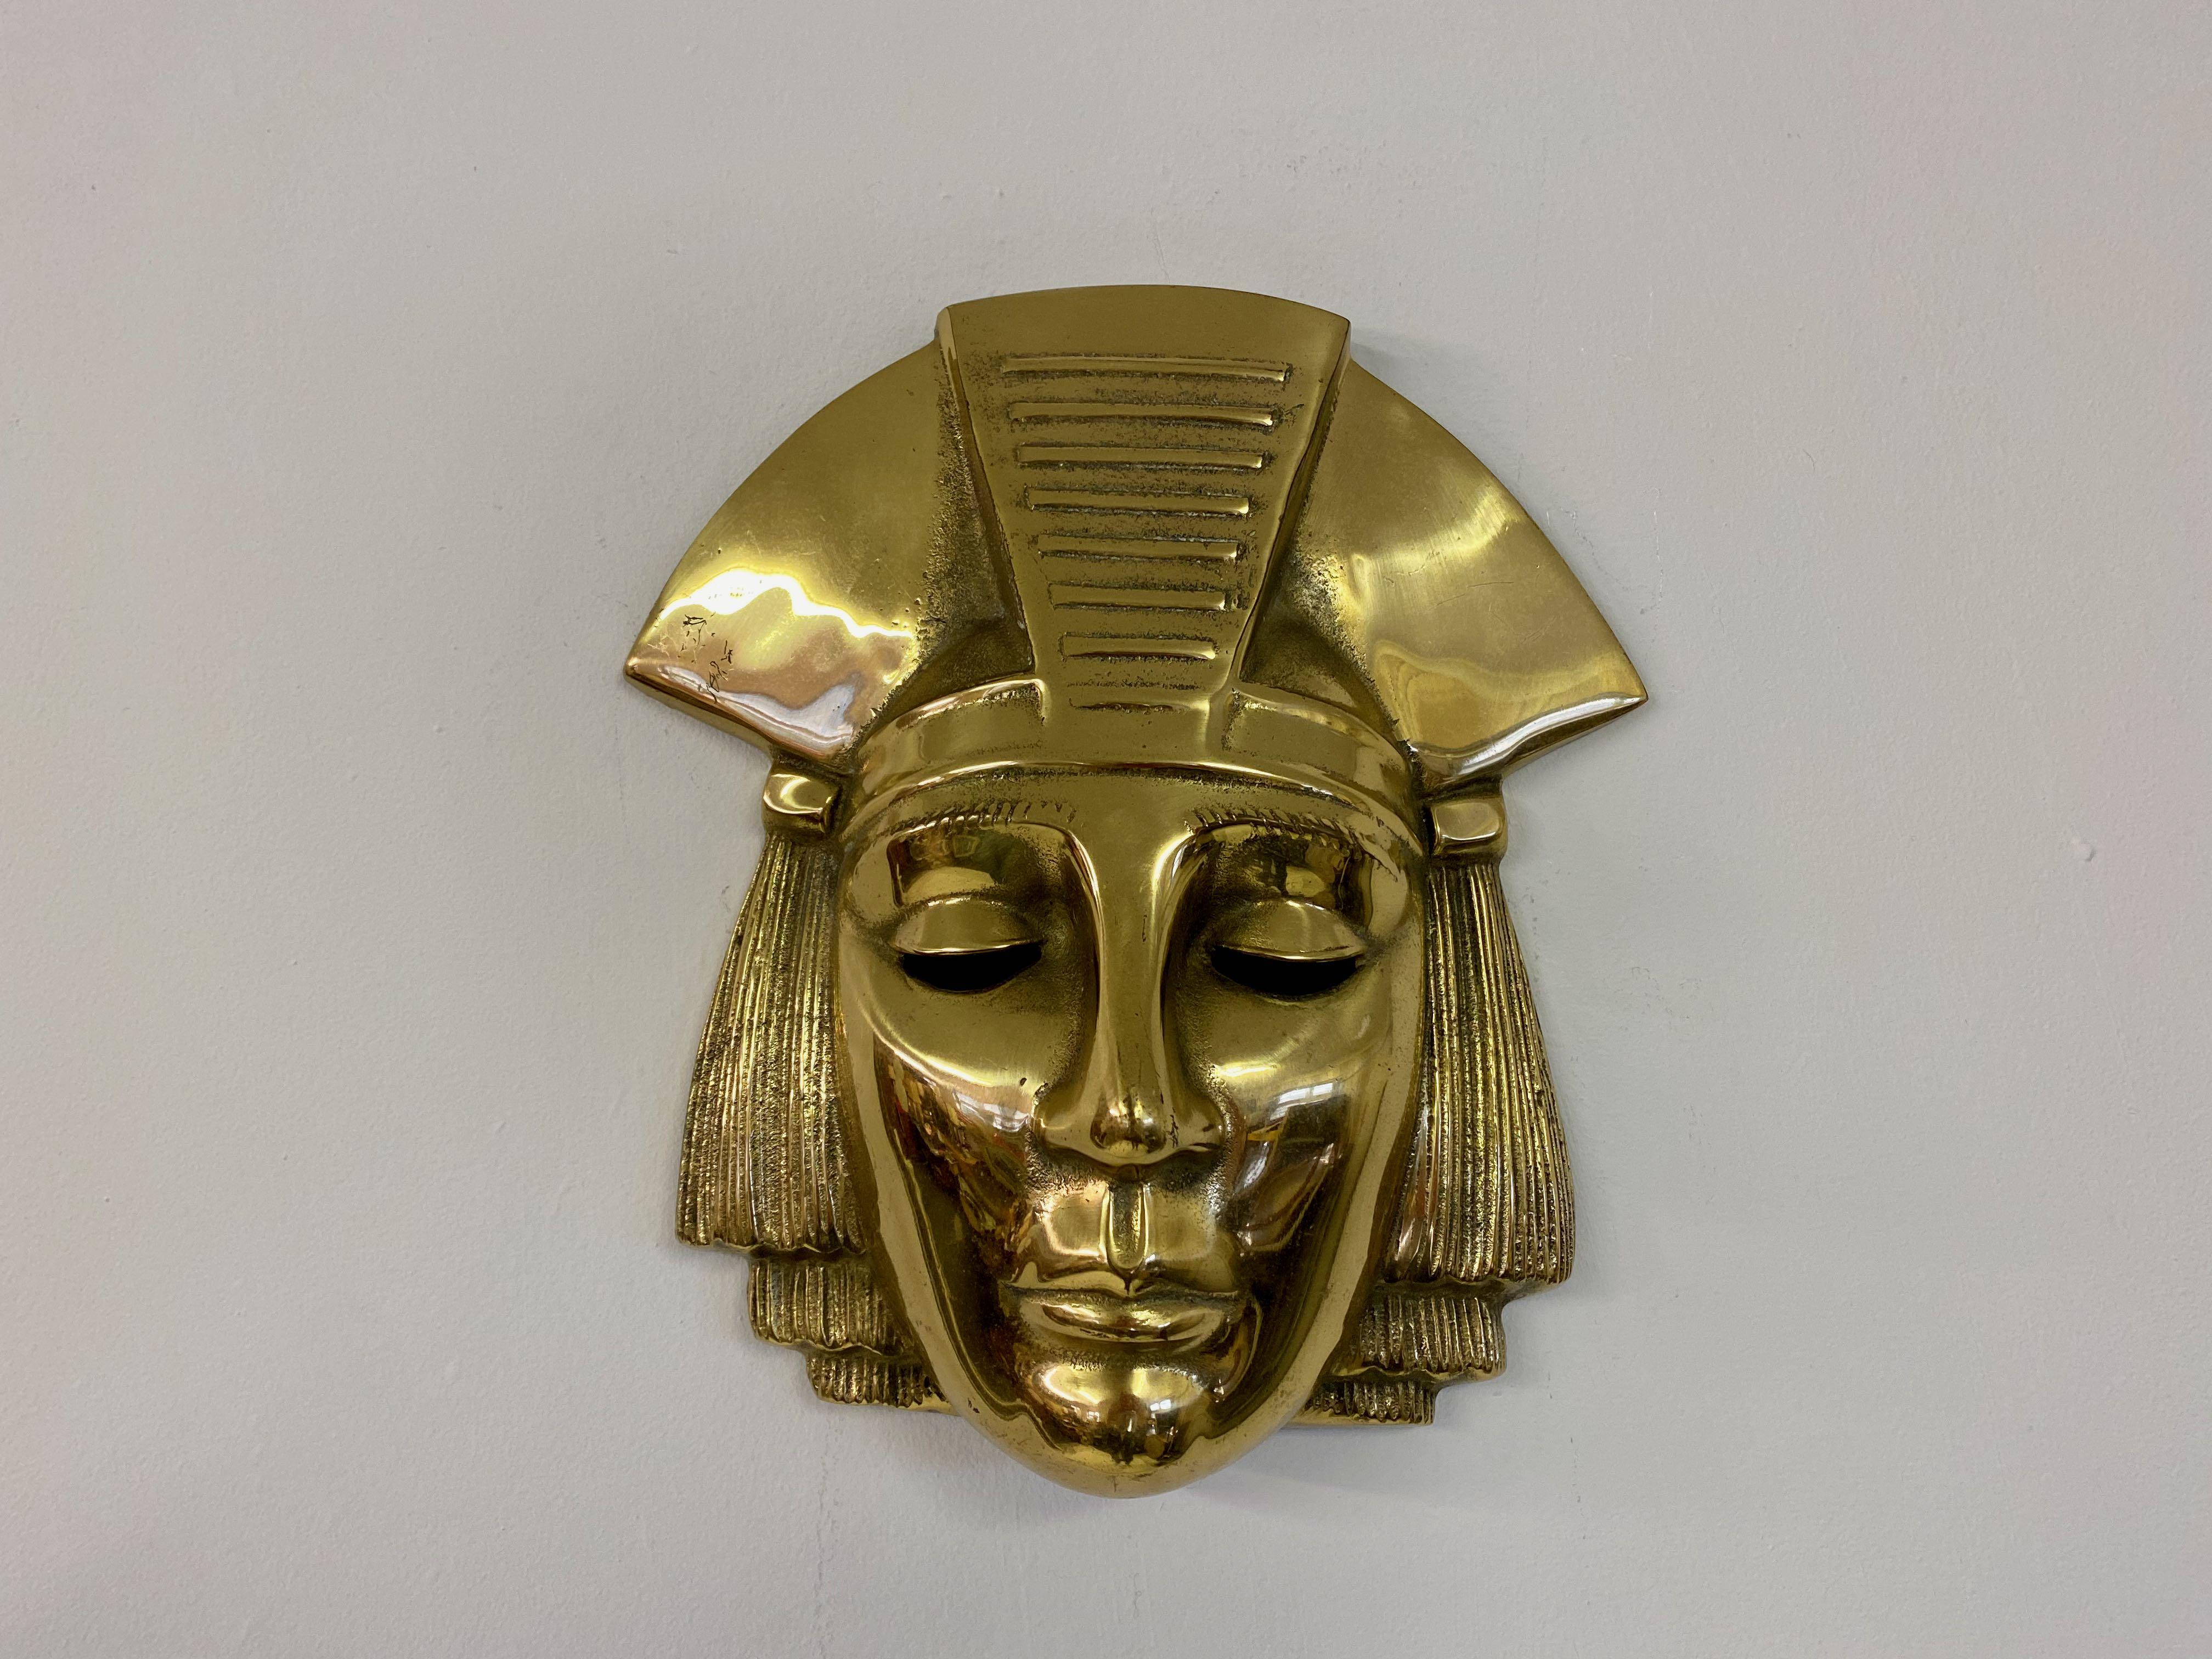 Brass Pharaoh face

Hanging plaque

Belgian 1970s.